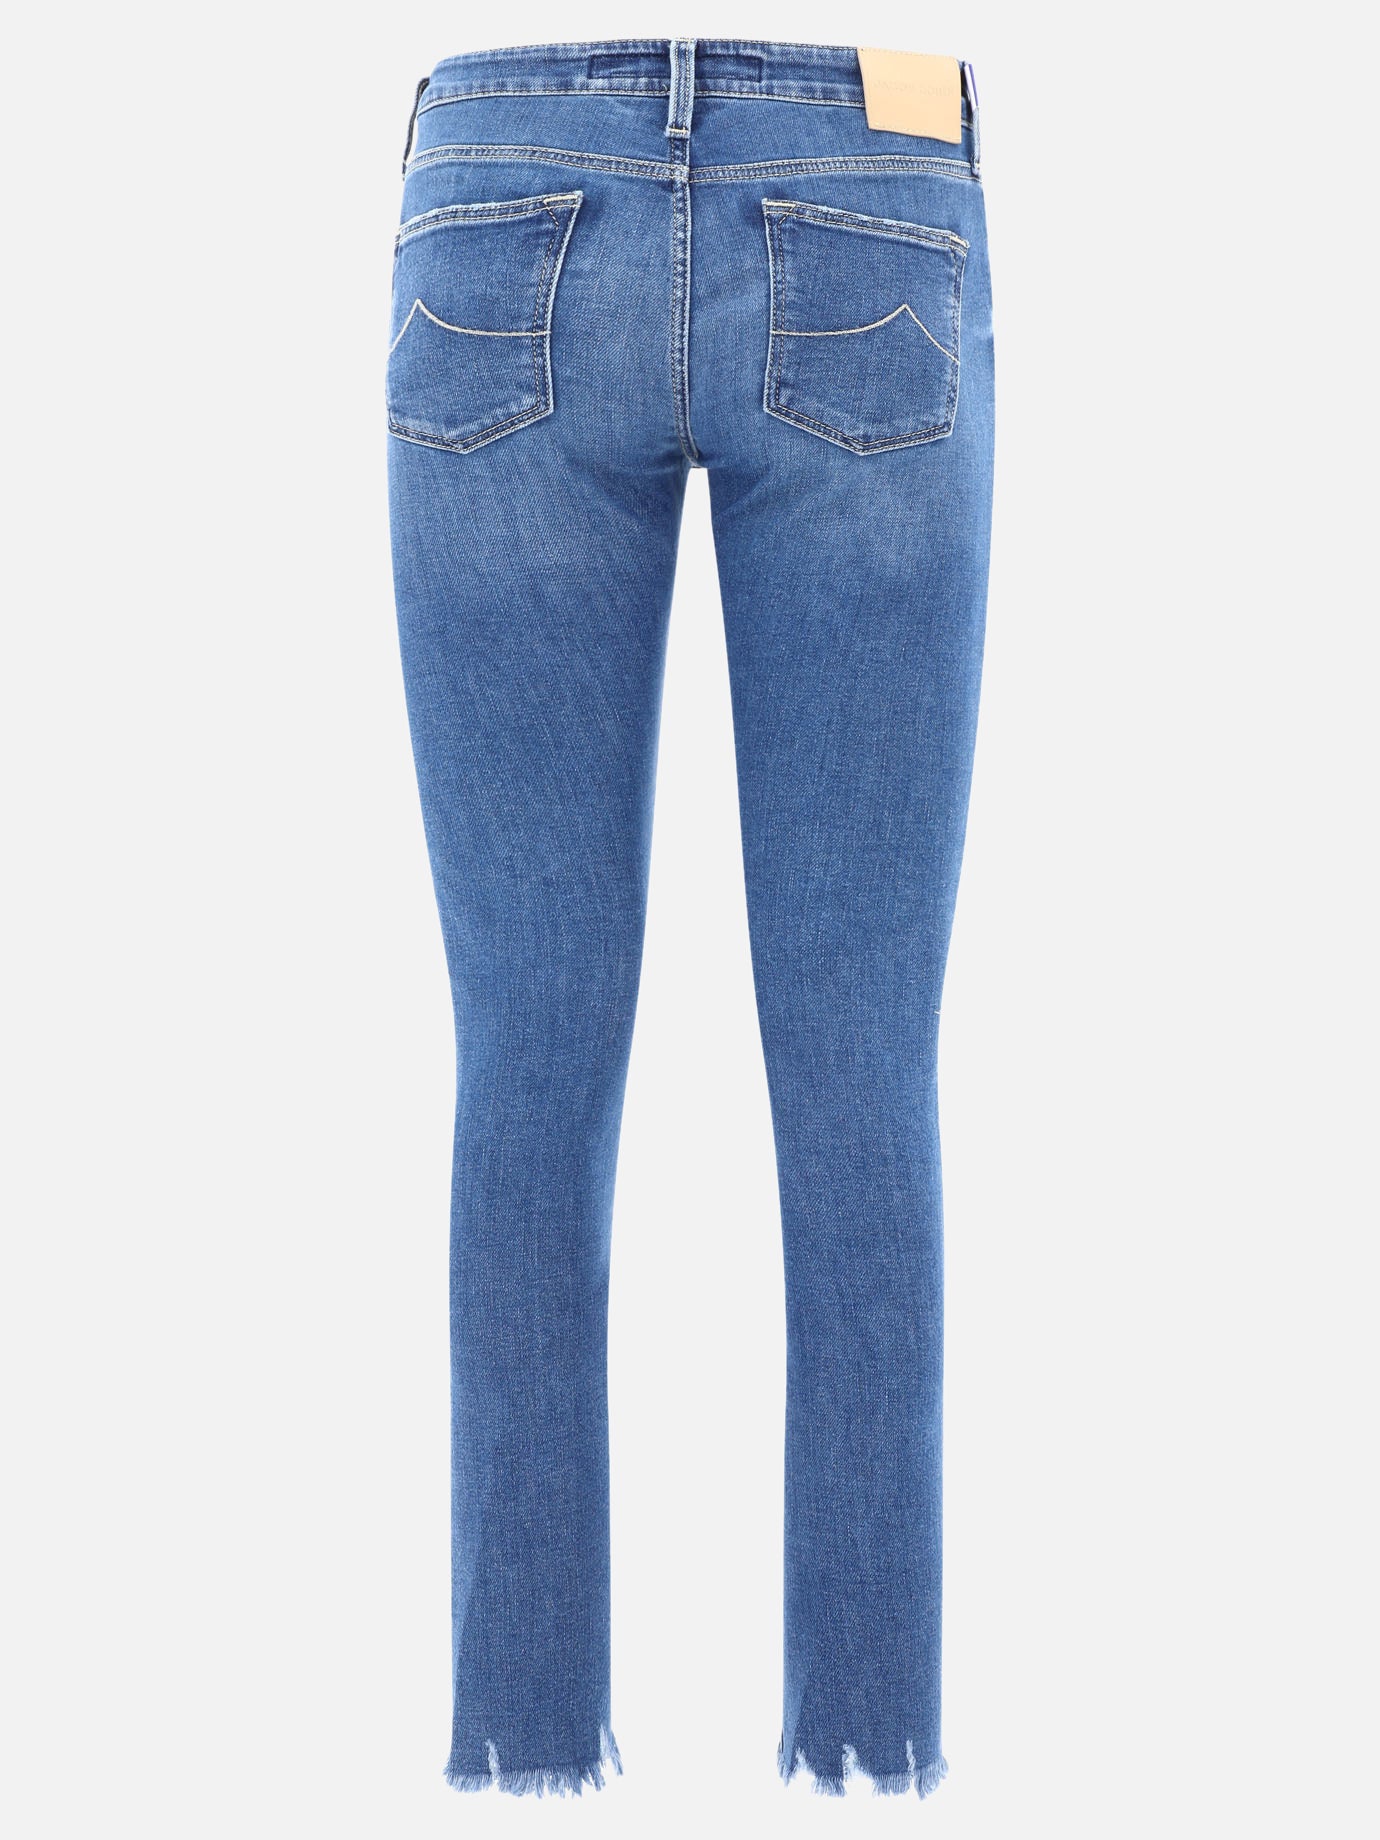 "Kim" jeans